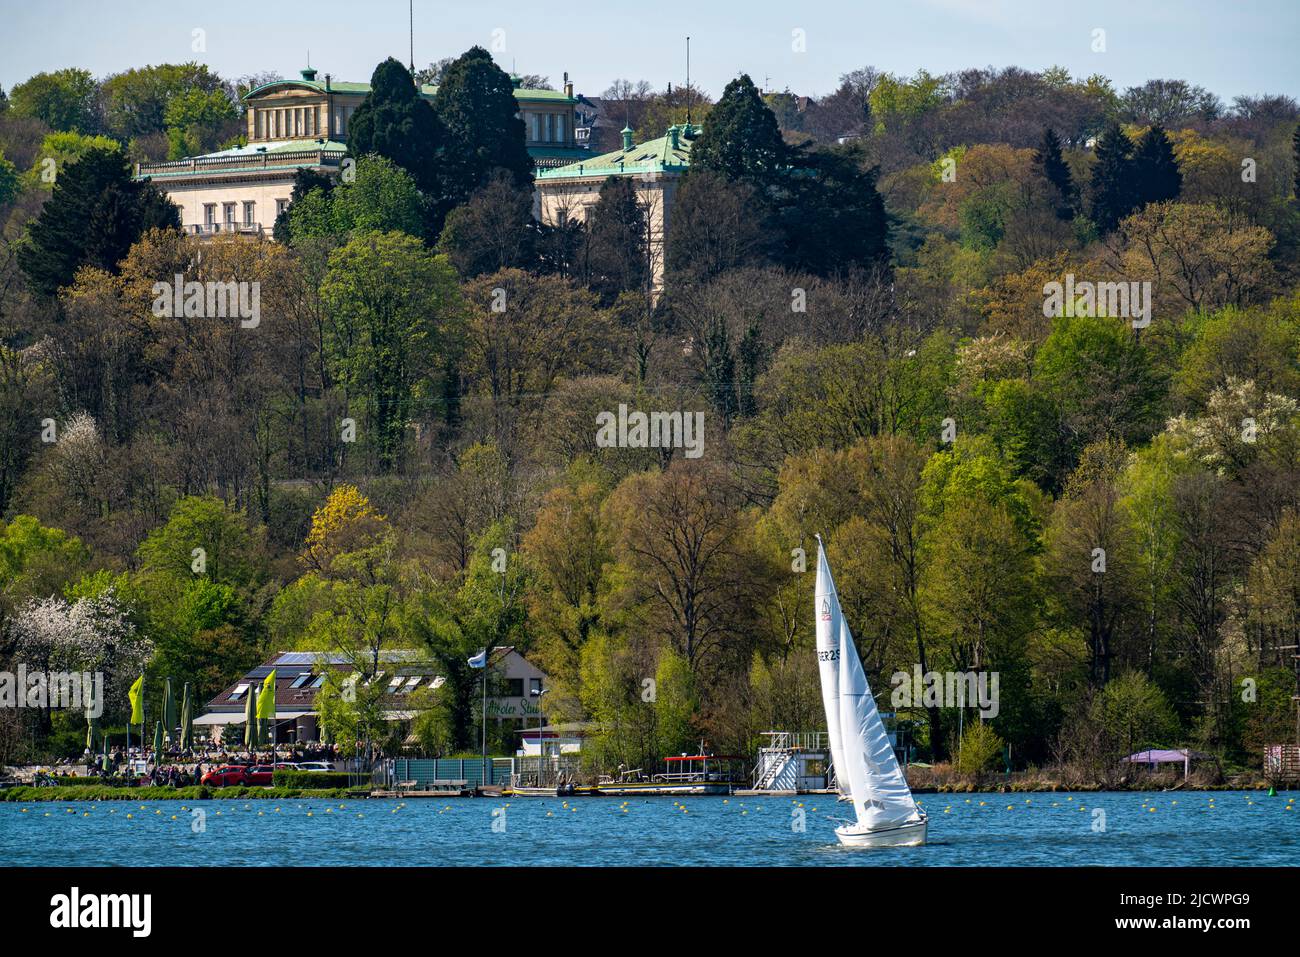 Lake Baldeney, Ruhr reservoir, Villa Hügel, sailing boat, Essen, NRW, Germany, Stock Photo